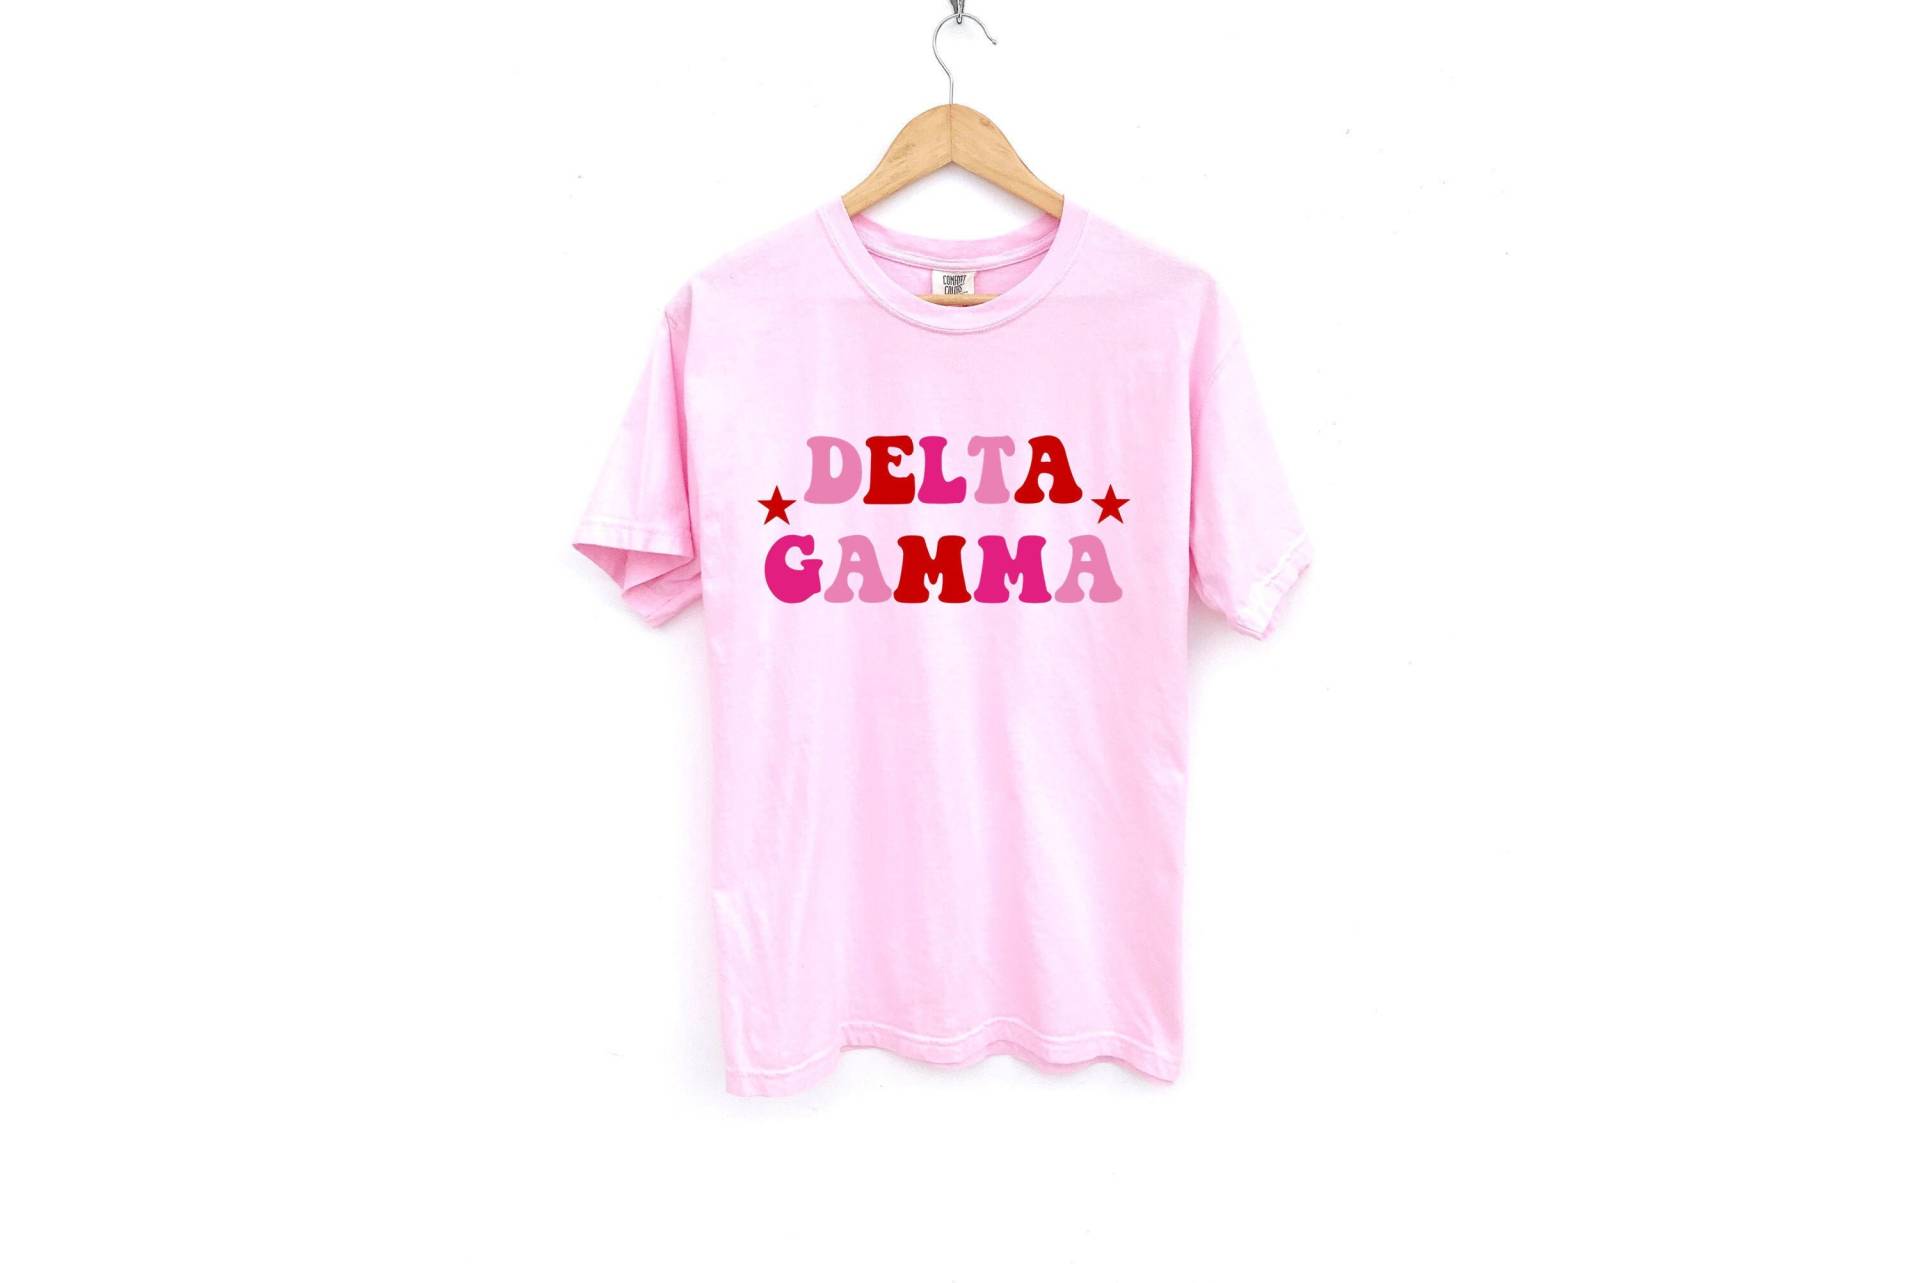 Delta Gamma/Pink Red Stars Sorority Shirt Comfort Colors von MadebyMollzShop